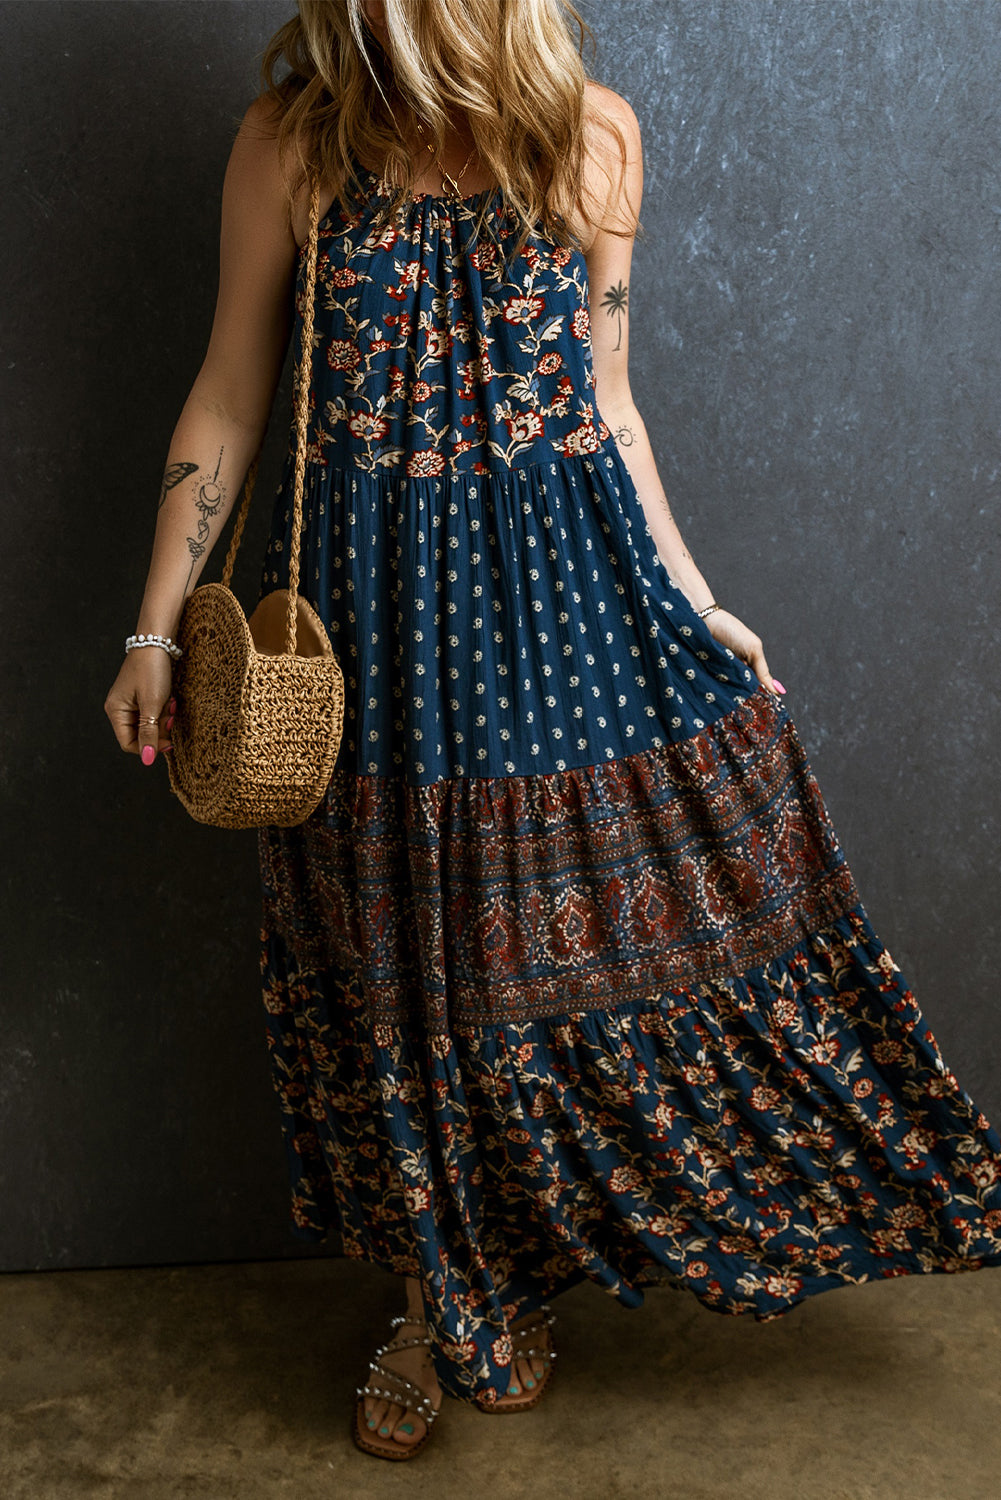 Blue Boho Floral Splicing Sleeveless Maxi Dress